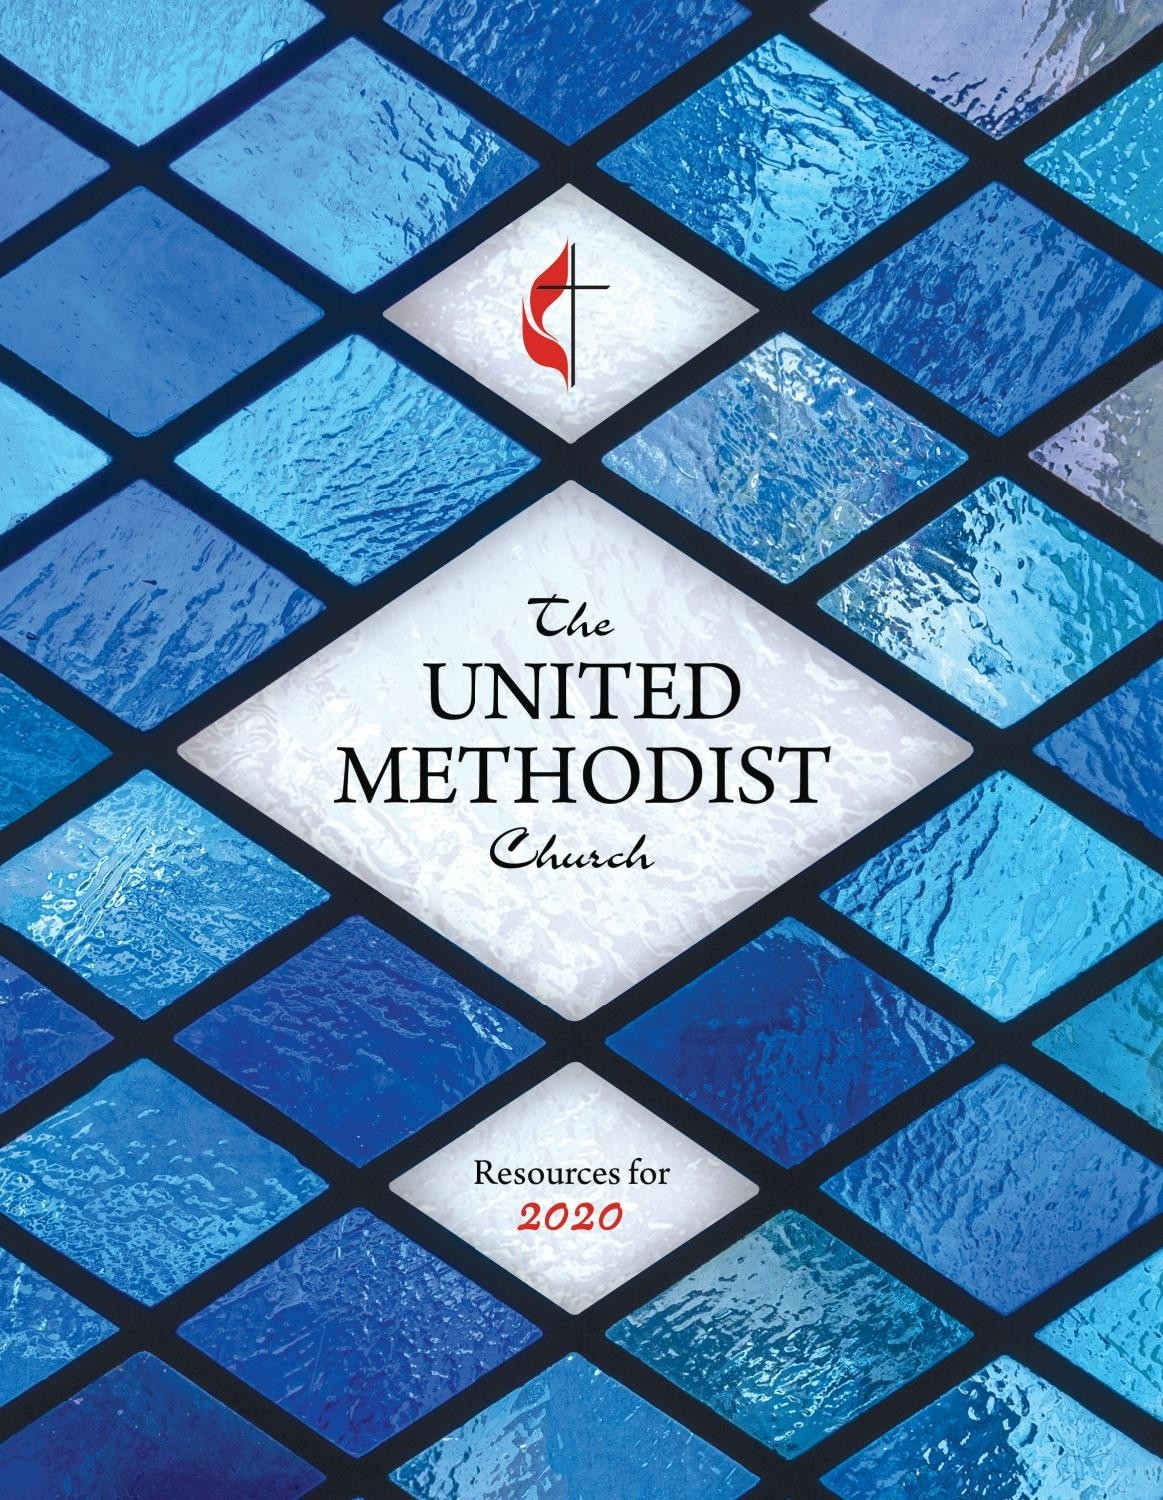 Lectionary Umc 2021 - Template Calendar Design  Lectionary 2021 United Methodist Church